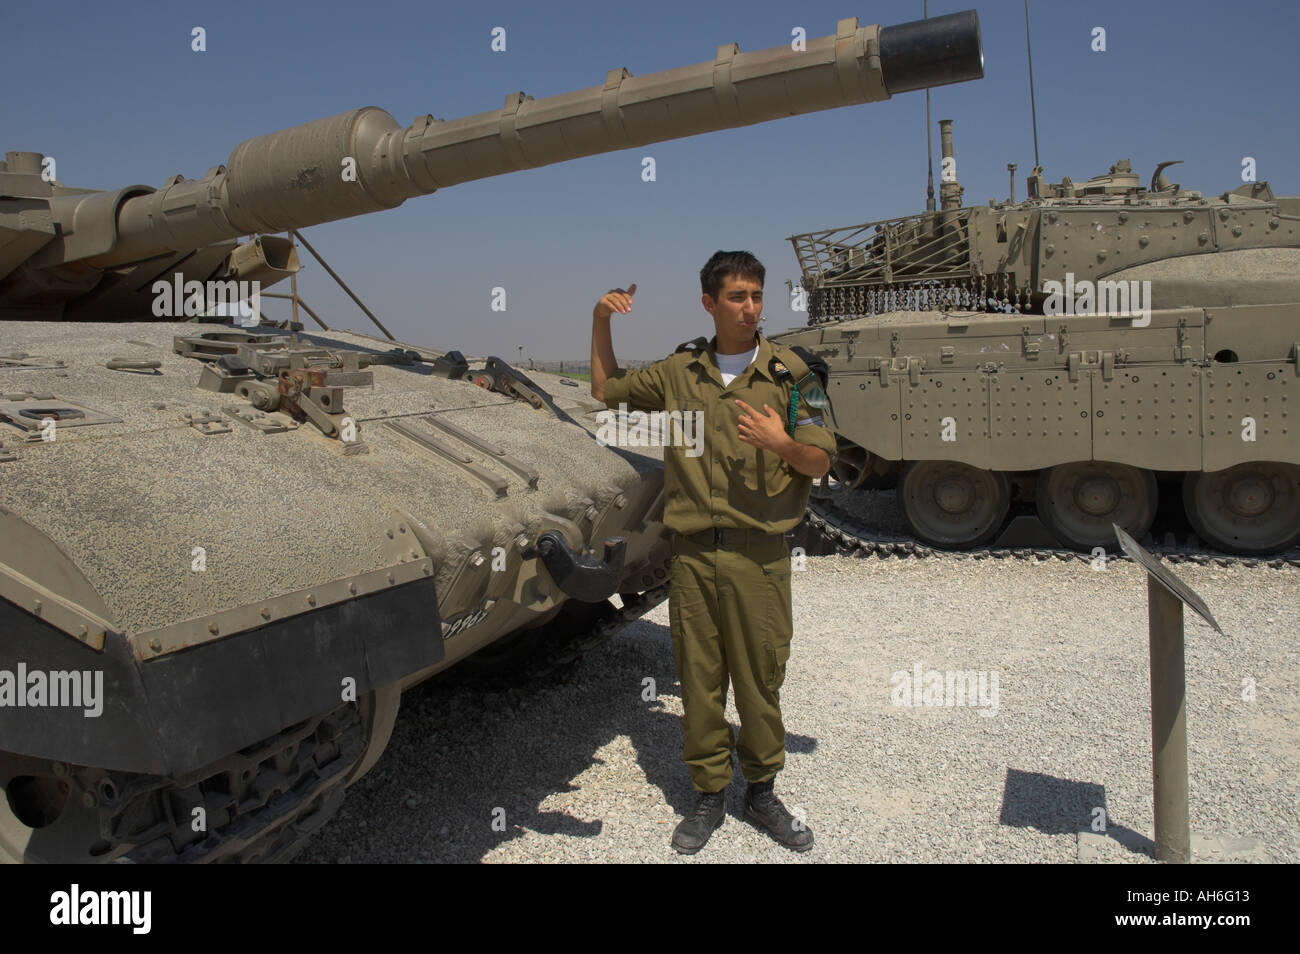 Israel Latrun Armed Corps Memorial soldier presenting israeli tanks Merkava  Stock Photo